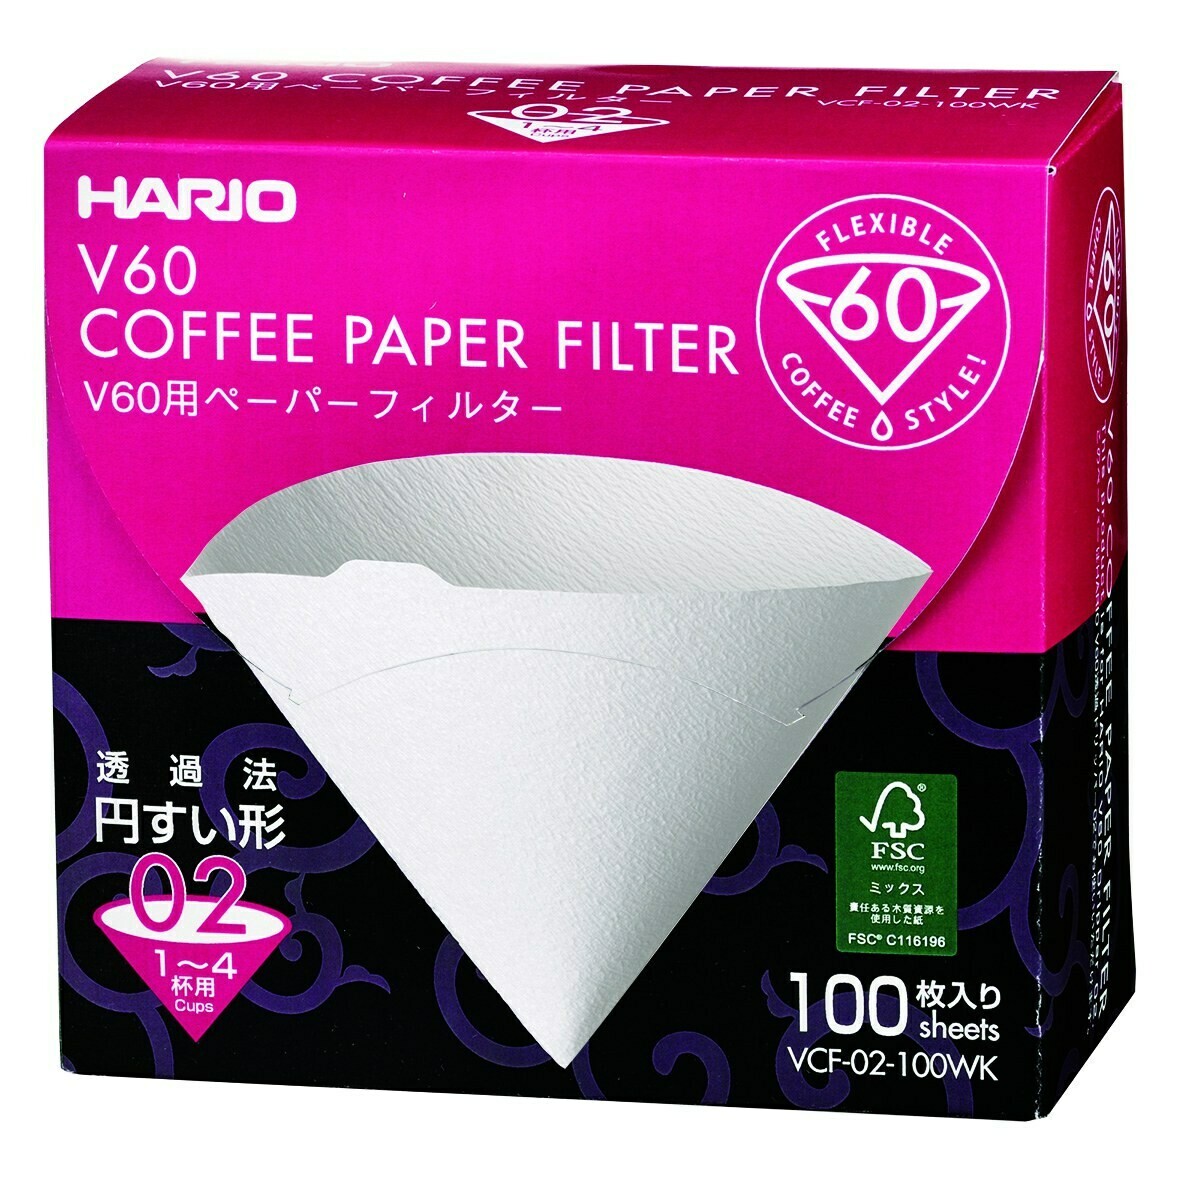 Hario V60 Paper Filter White 02, 100ct box